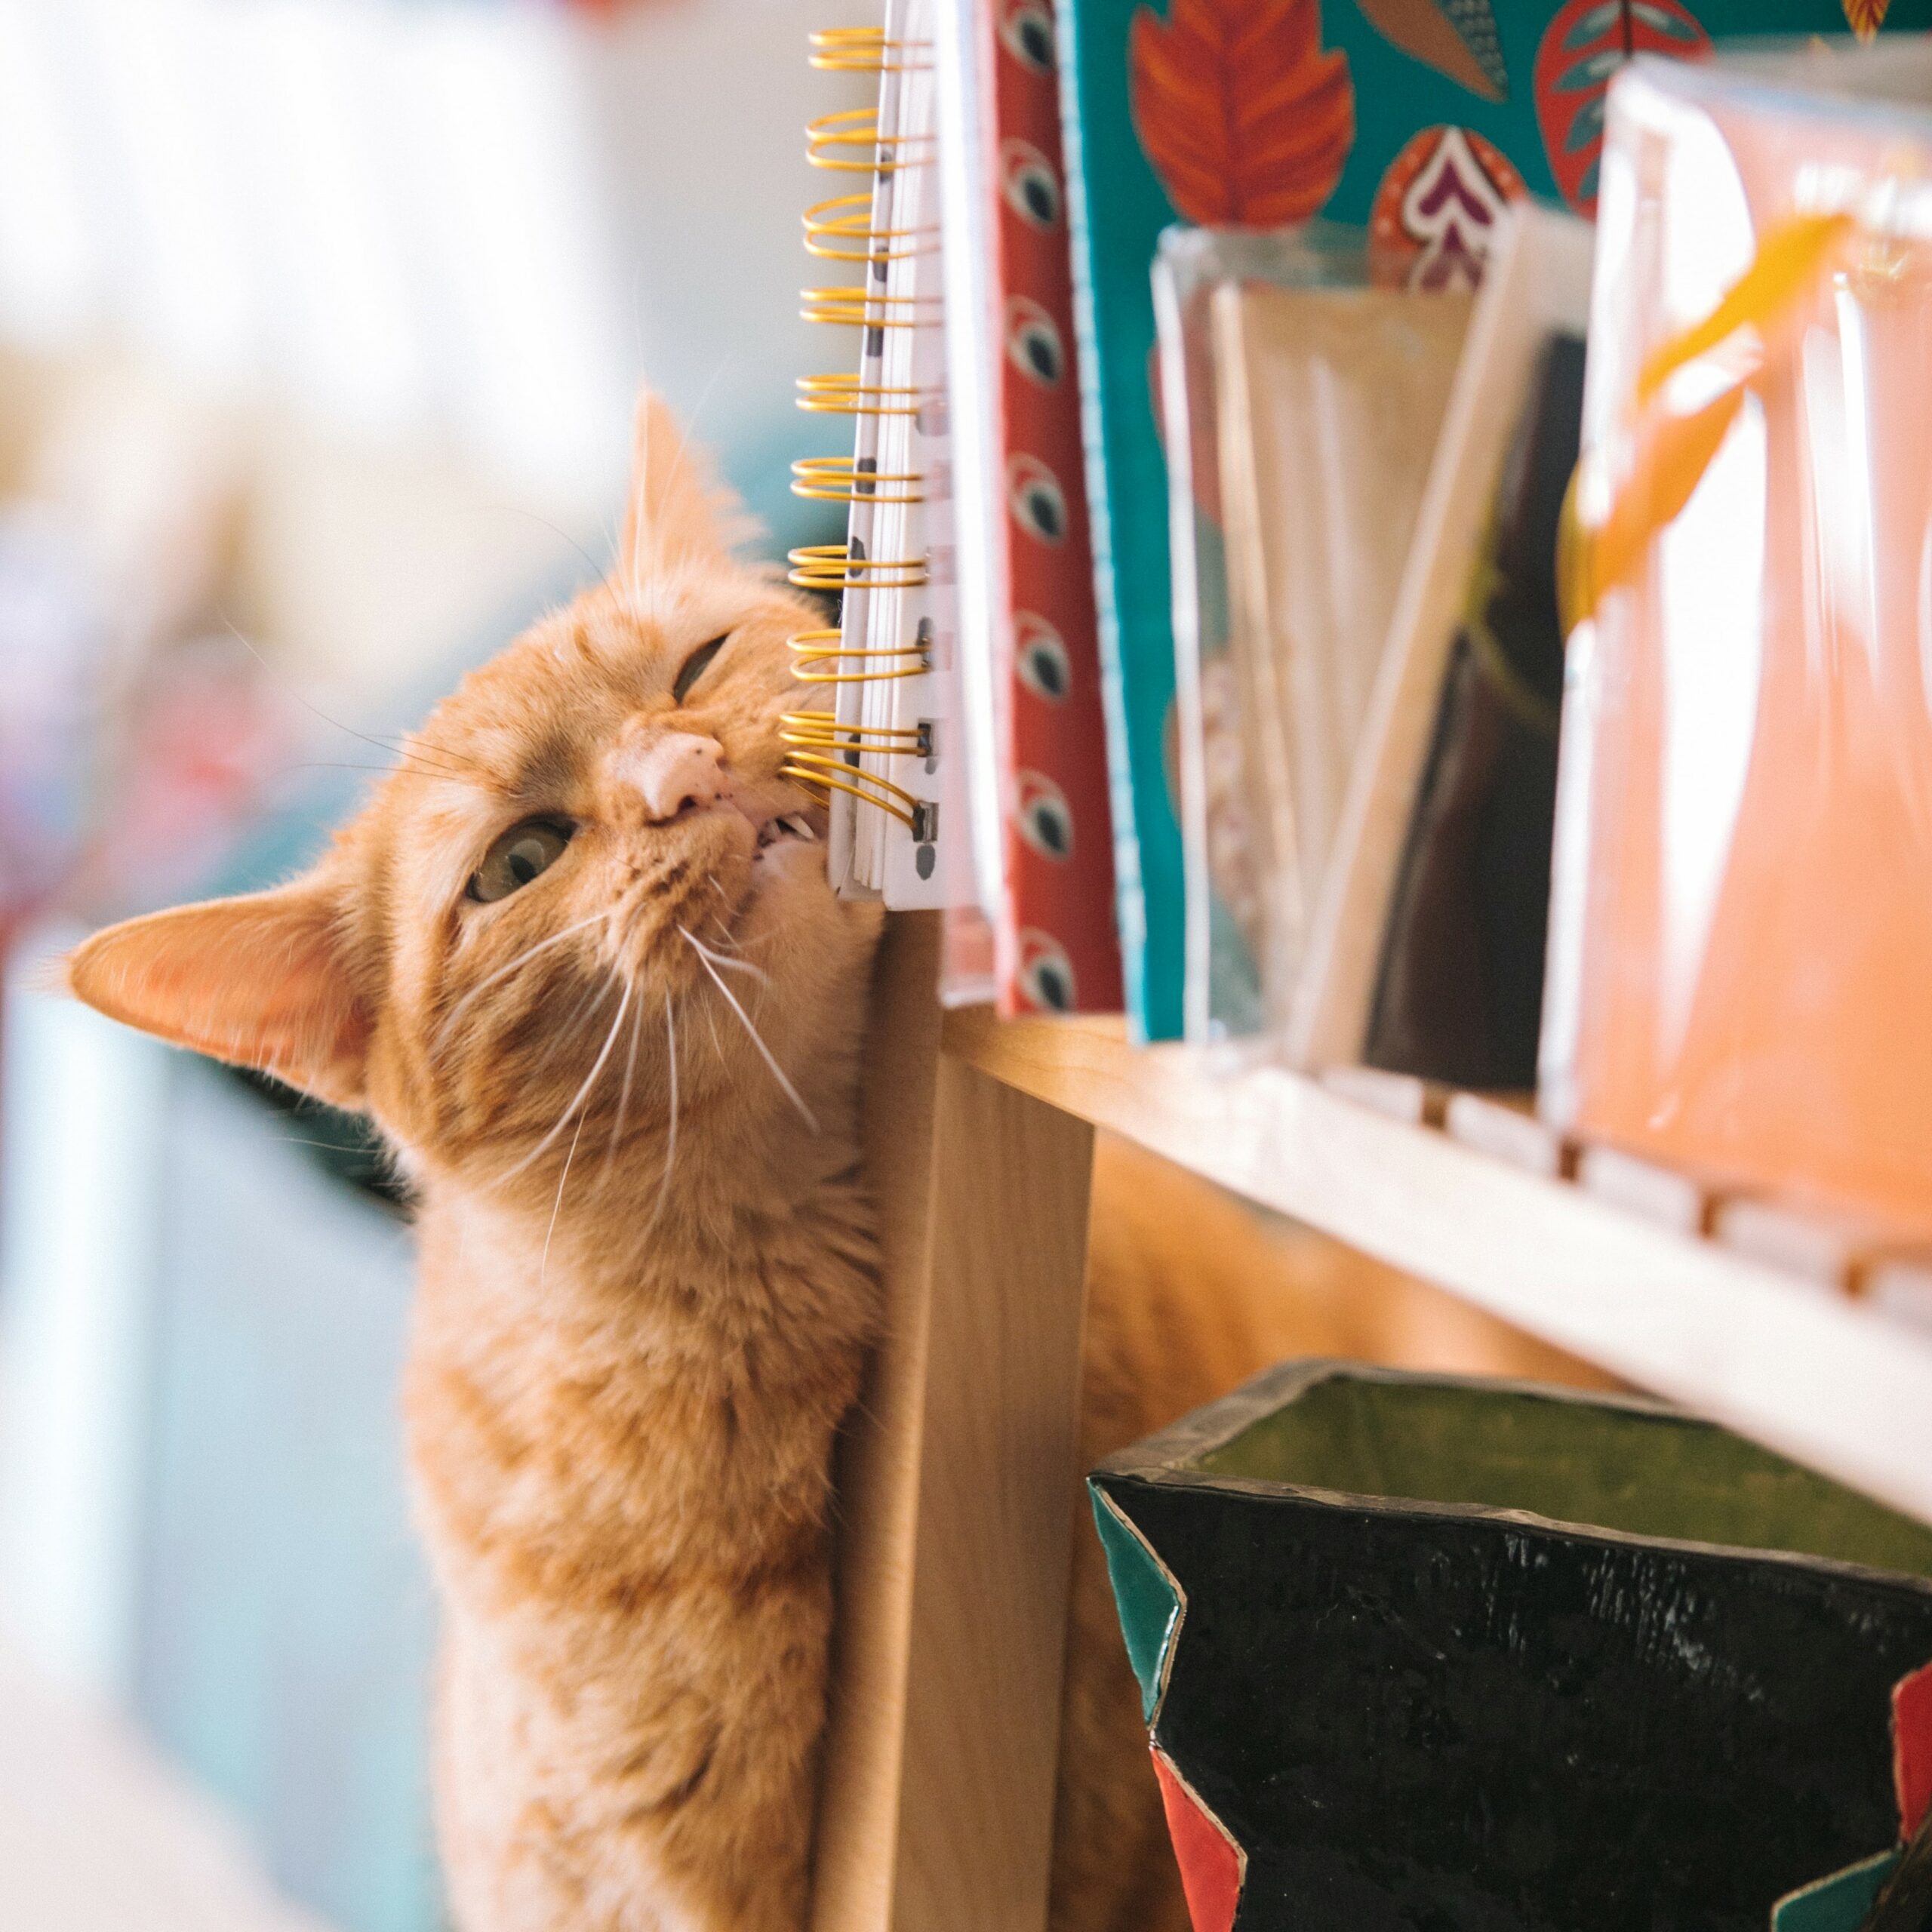 Orange tabby cat rubbing on a bookshelf